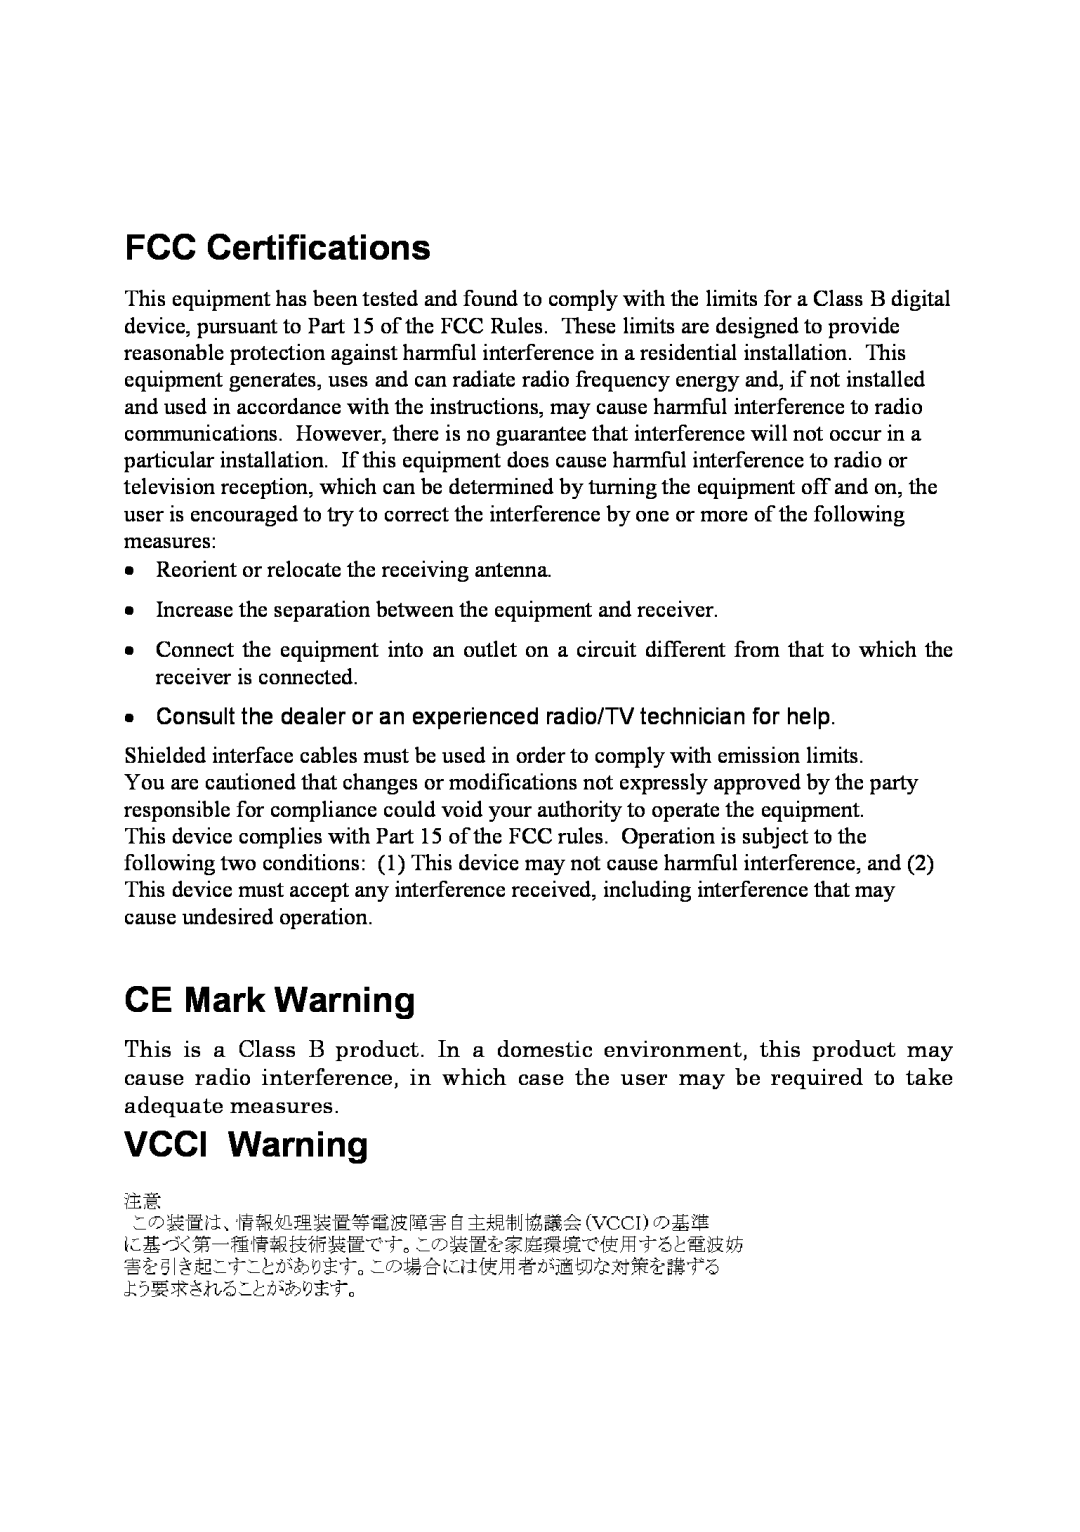 D-Link DSS-5 manual FCC Certifications, CE Mark Warning, VCCI Warning 